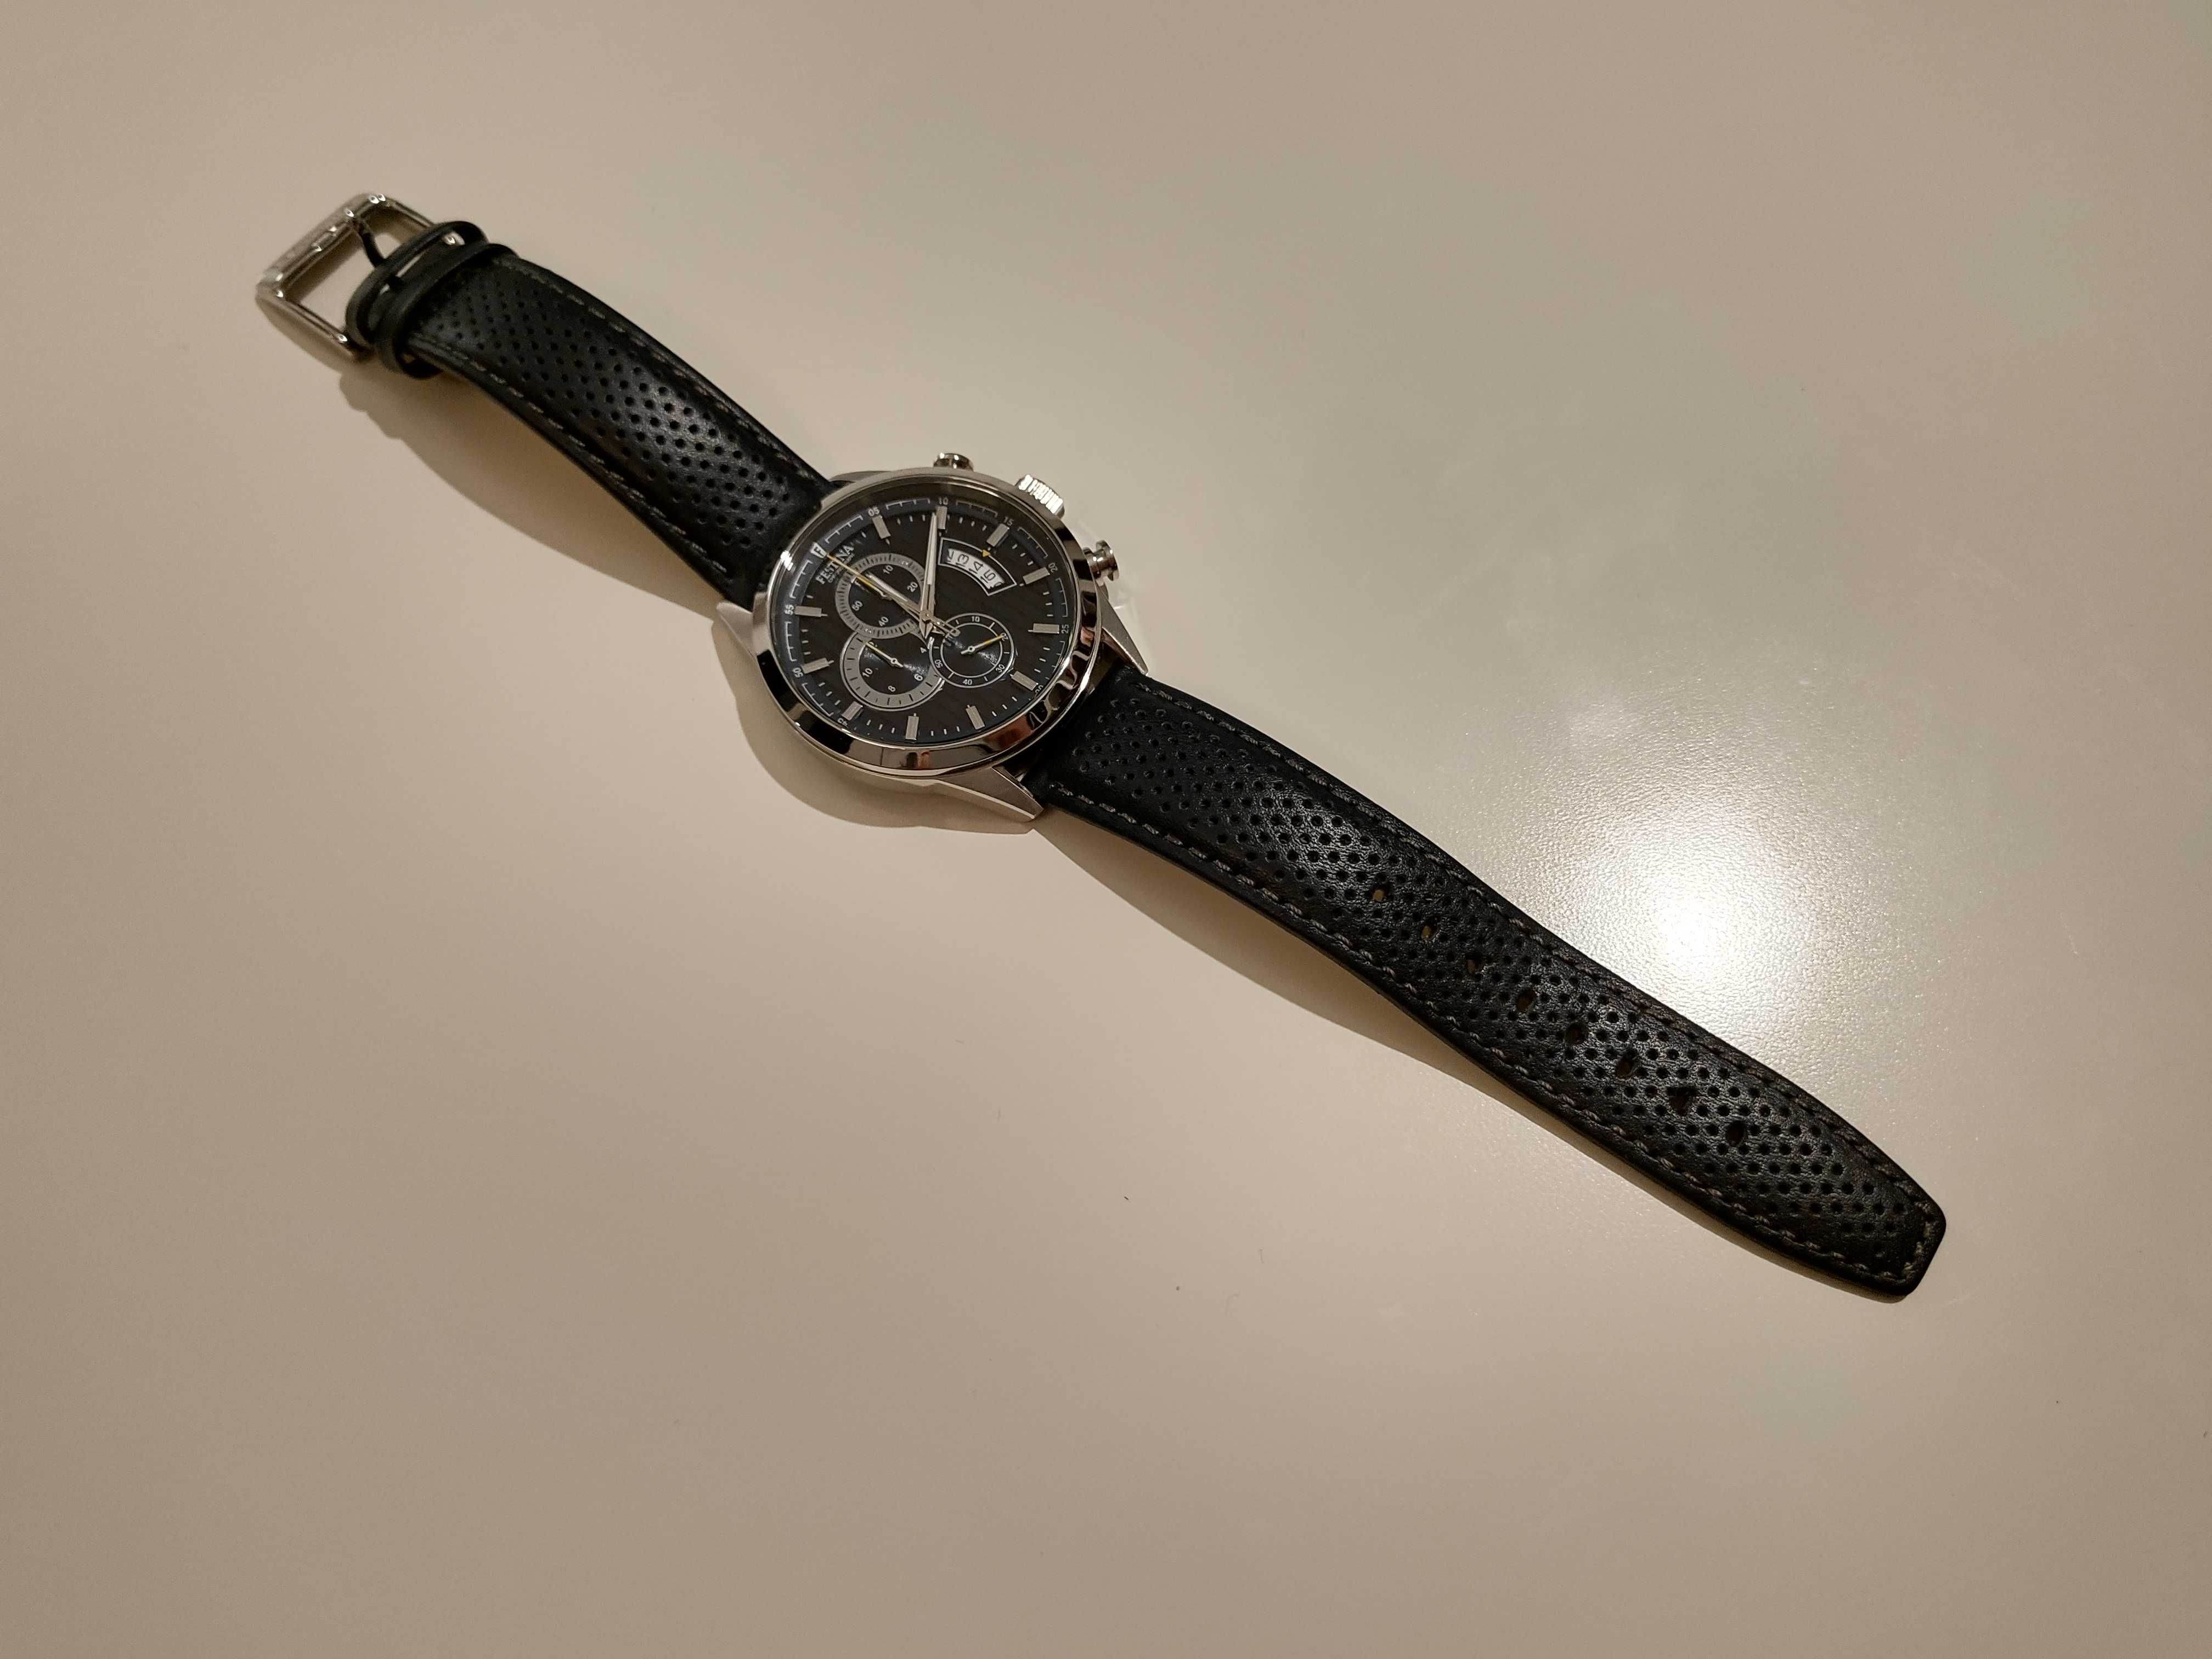 Zegarek Festina f20271 granatowo-srebrny